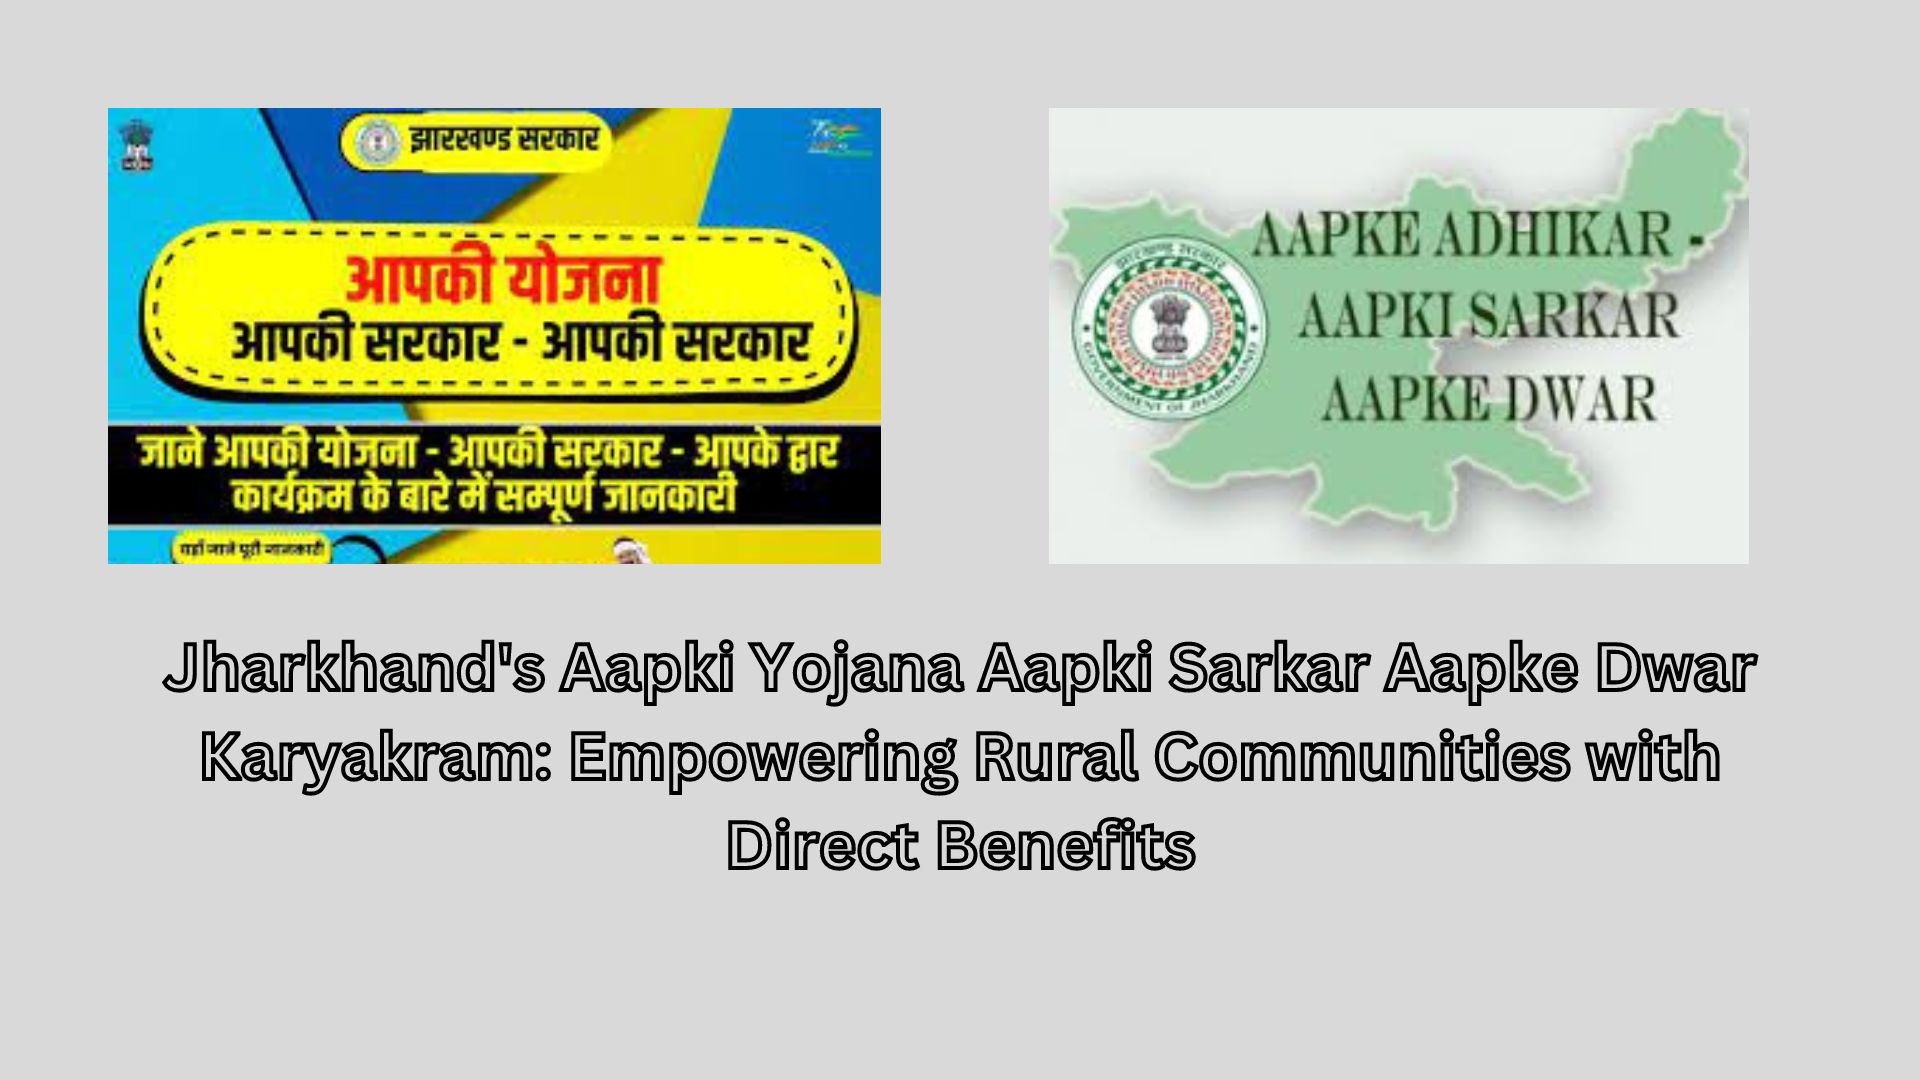 Jharkhand's Aapki Yojana Aapki Sarkar Aapke Dwar Karyakram: Empowering Rural Communities with Direct Benefits